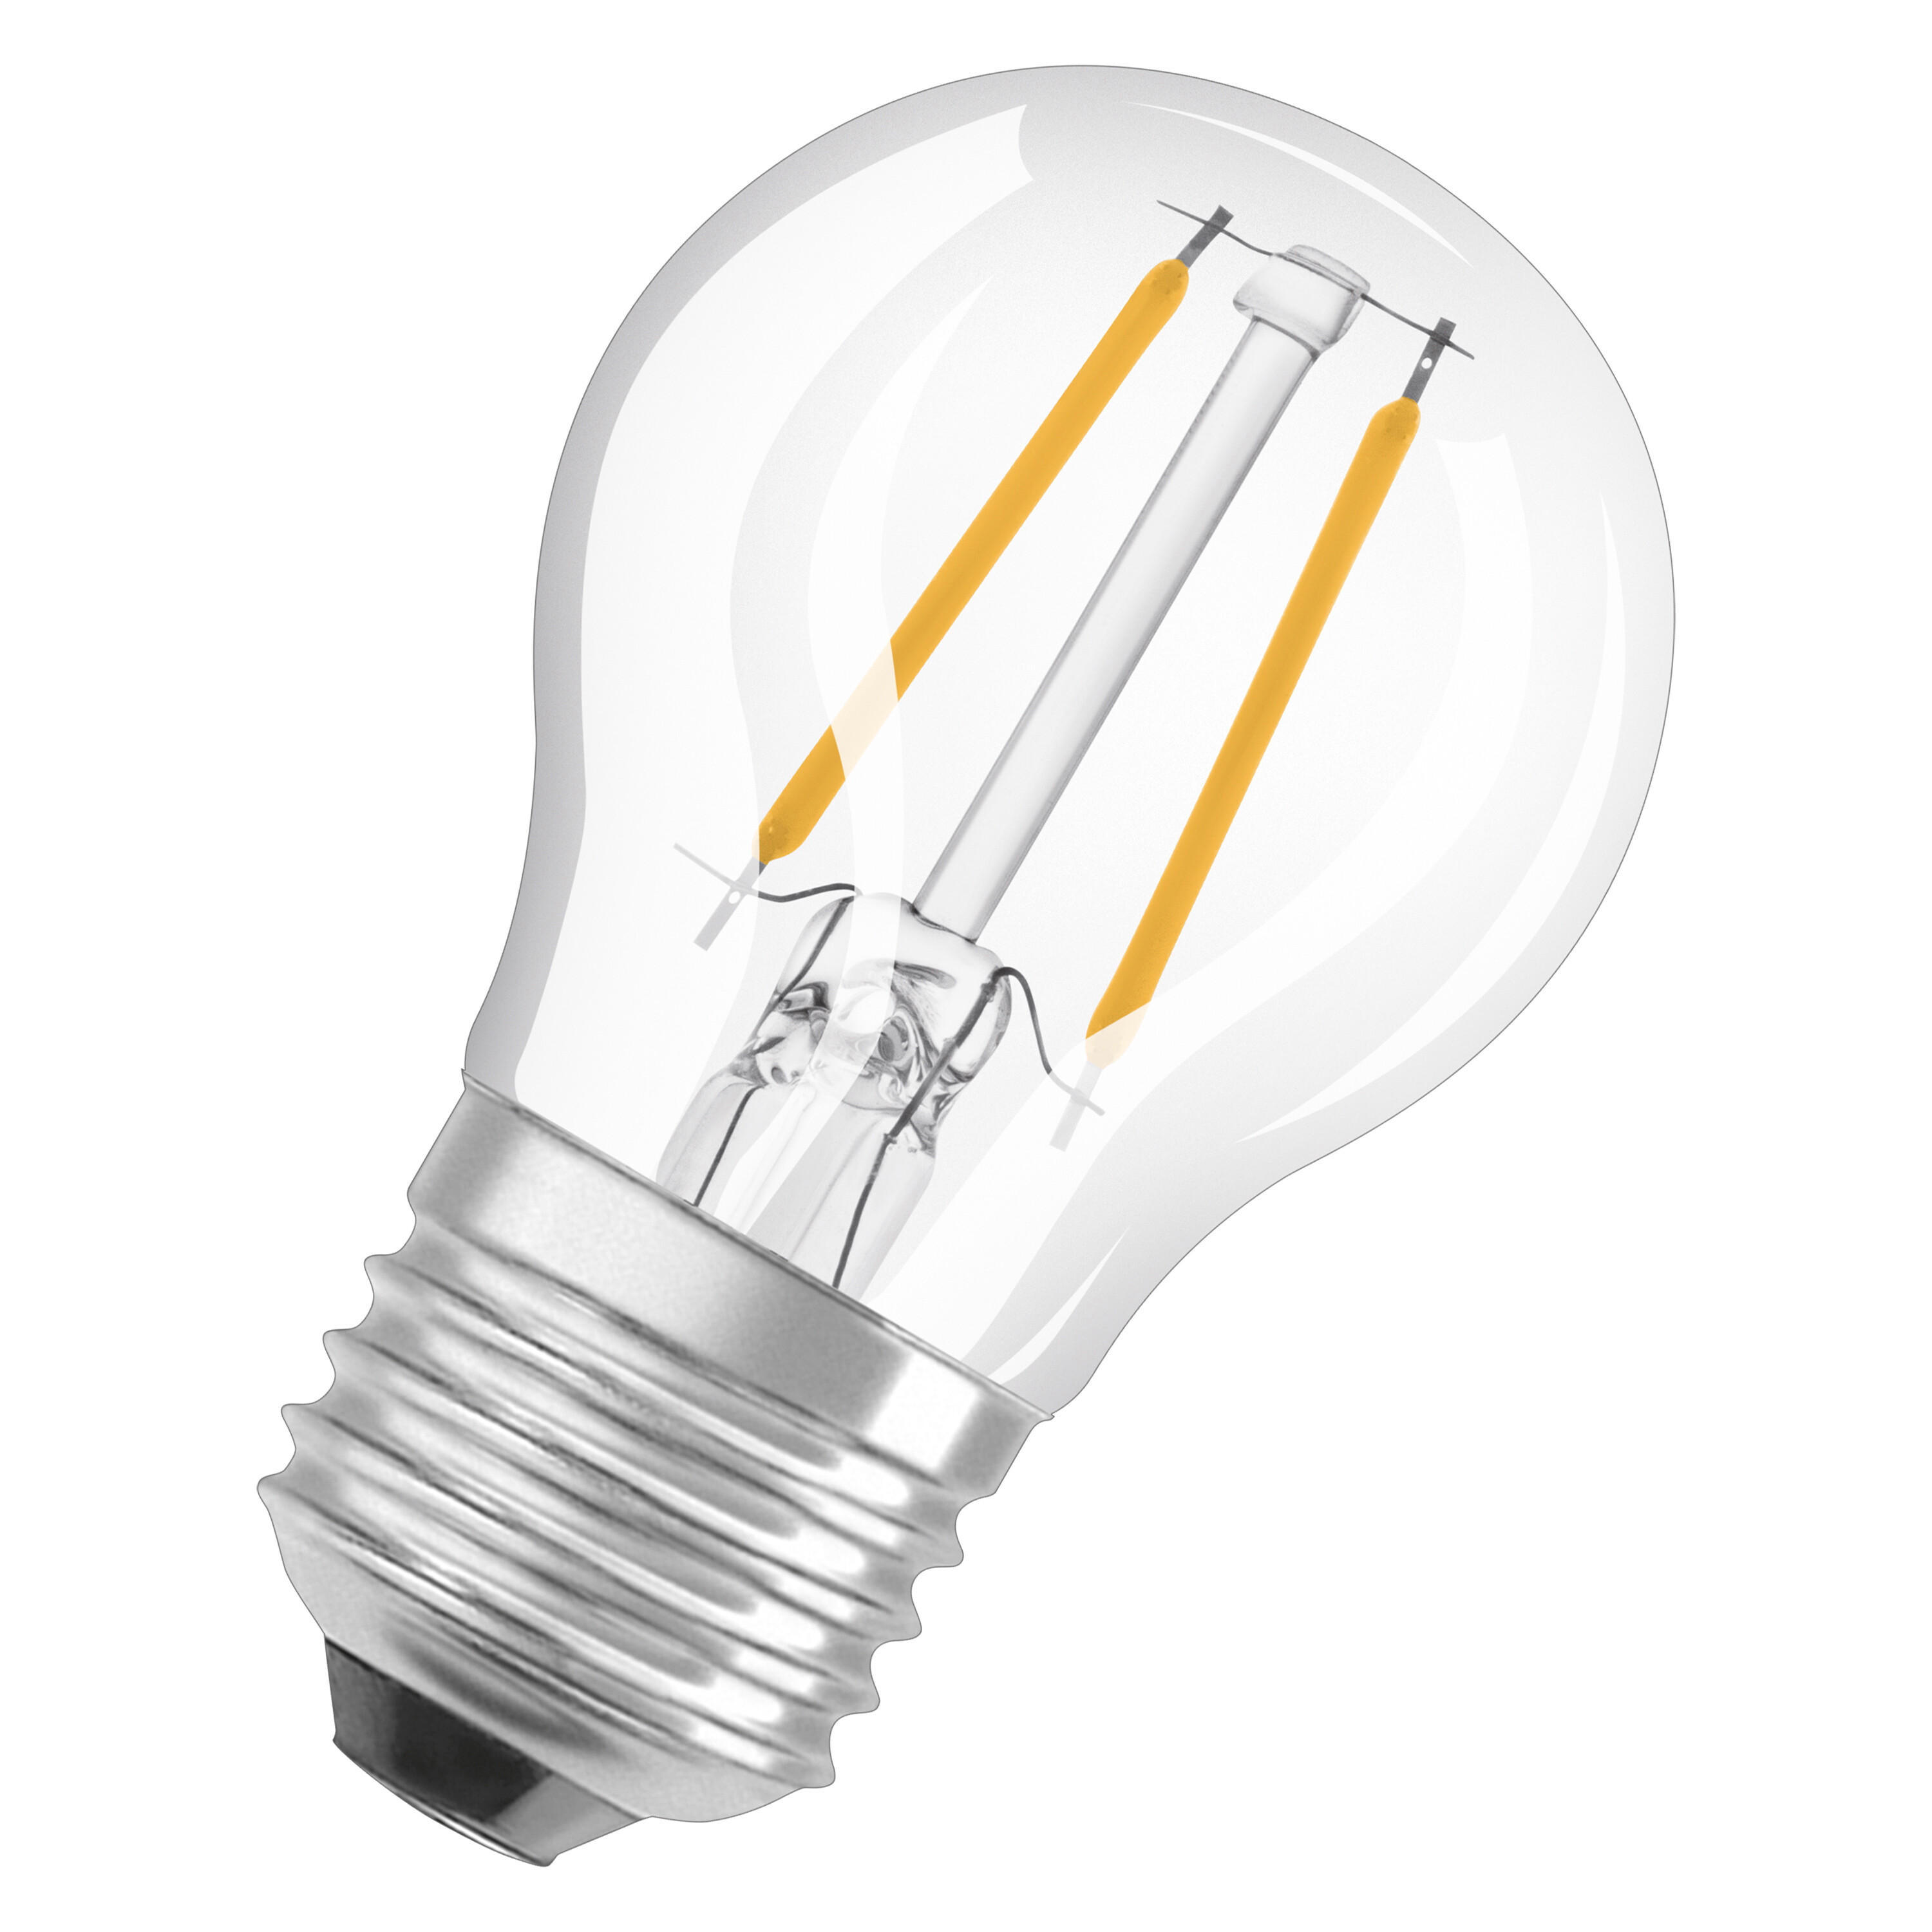 OSRAM  LED SUPERSTAR PLUS Warmweiß FILAMENT Lampe CLASSIC Lumen LED P 470